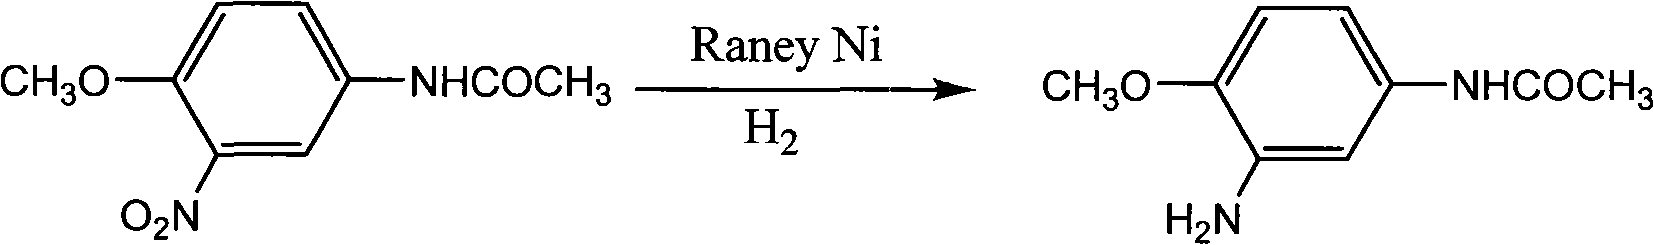 Method for preparing 3-amino-4-methoxyacetanilide by taking Raney nickel as catalyst